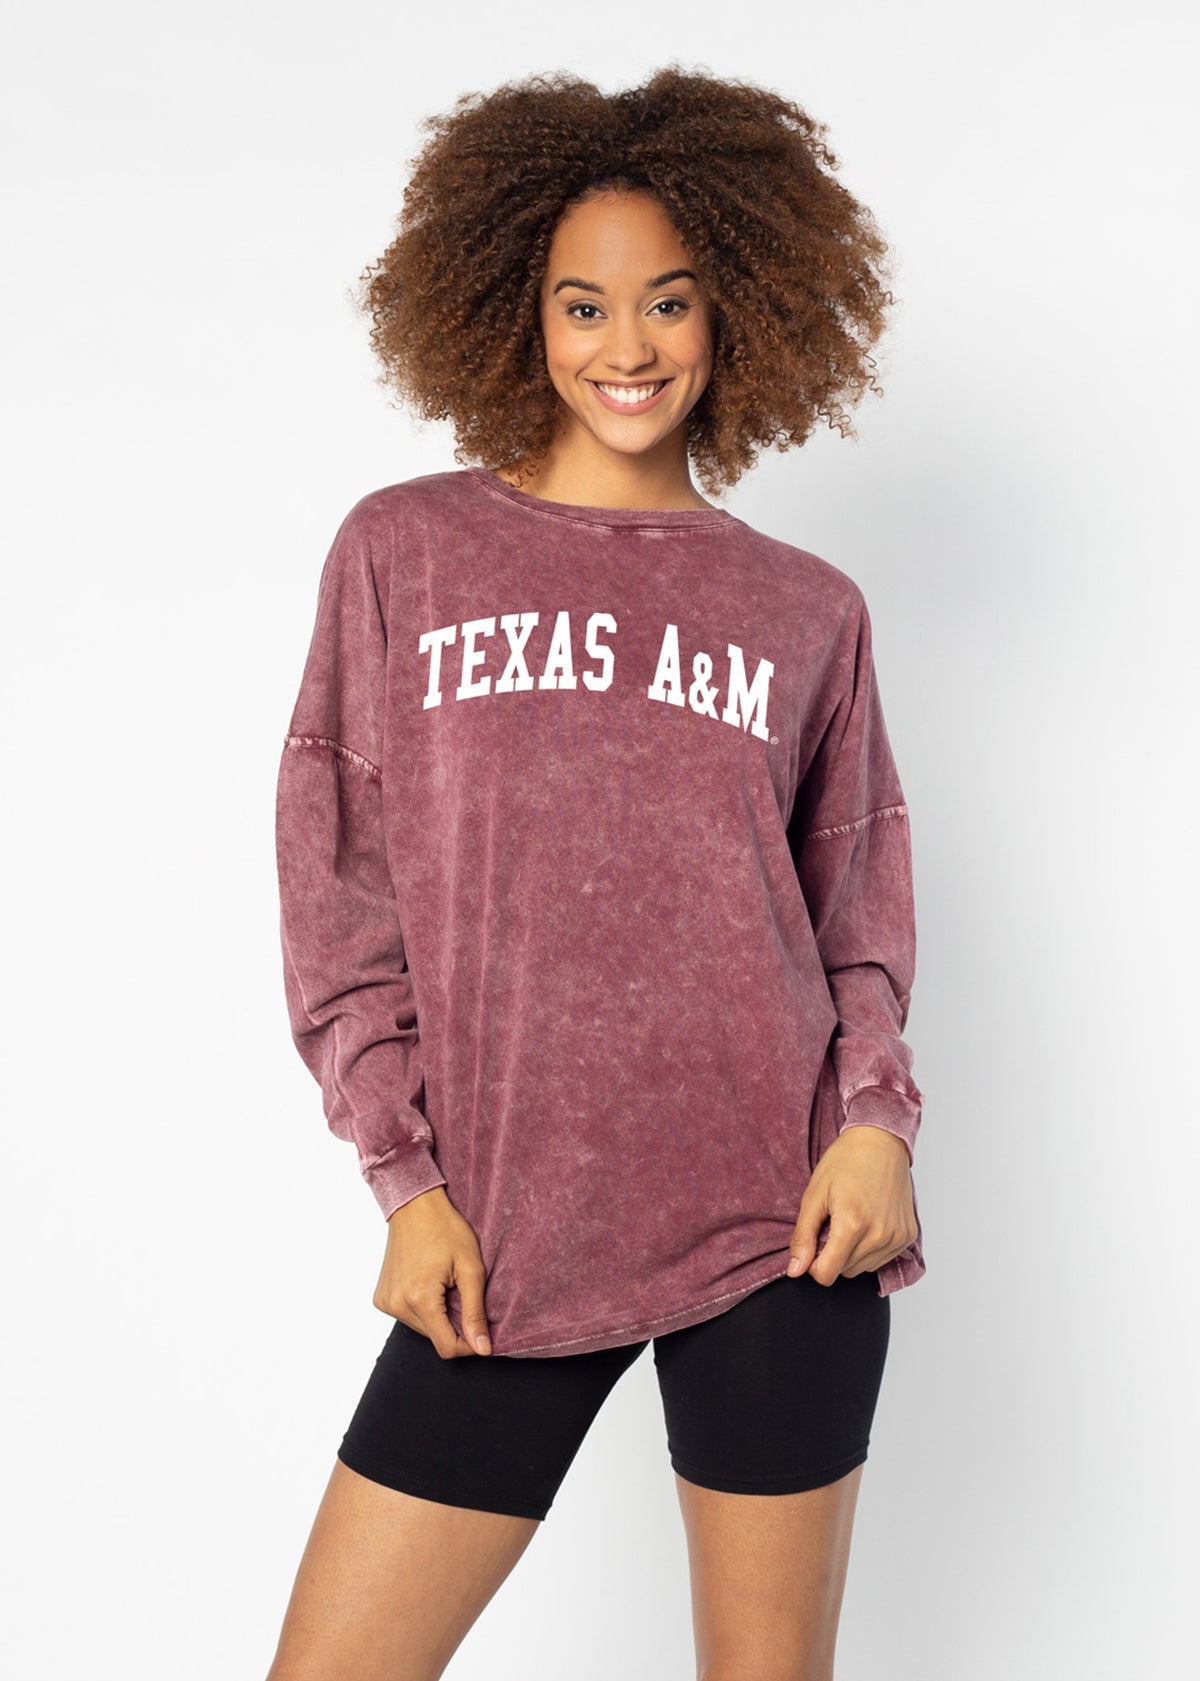 Texas A&M Aggies tshirt